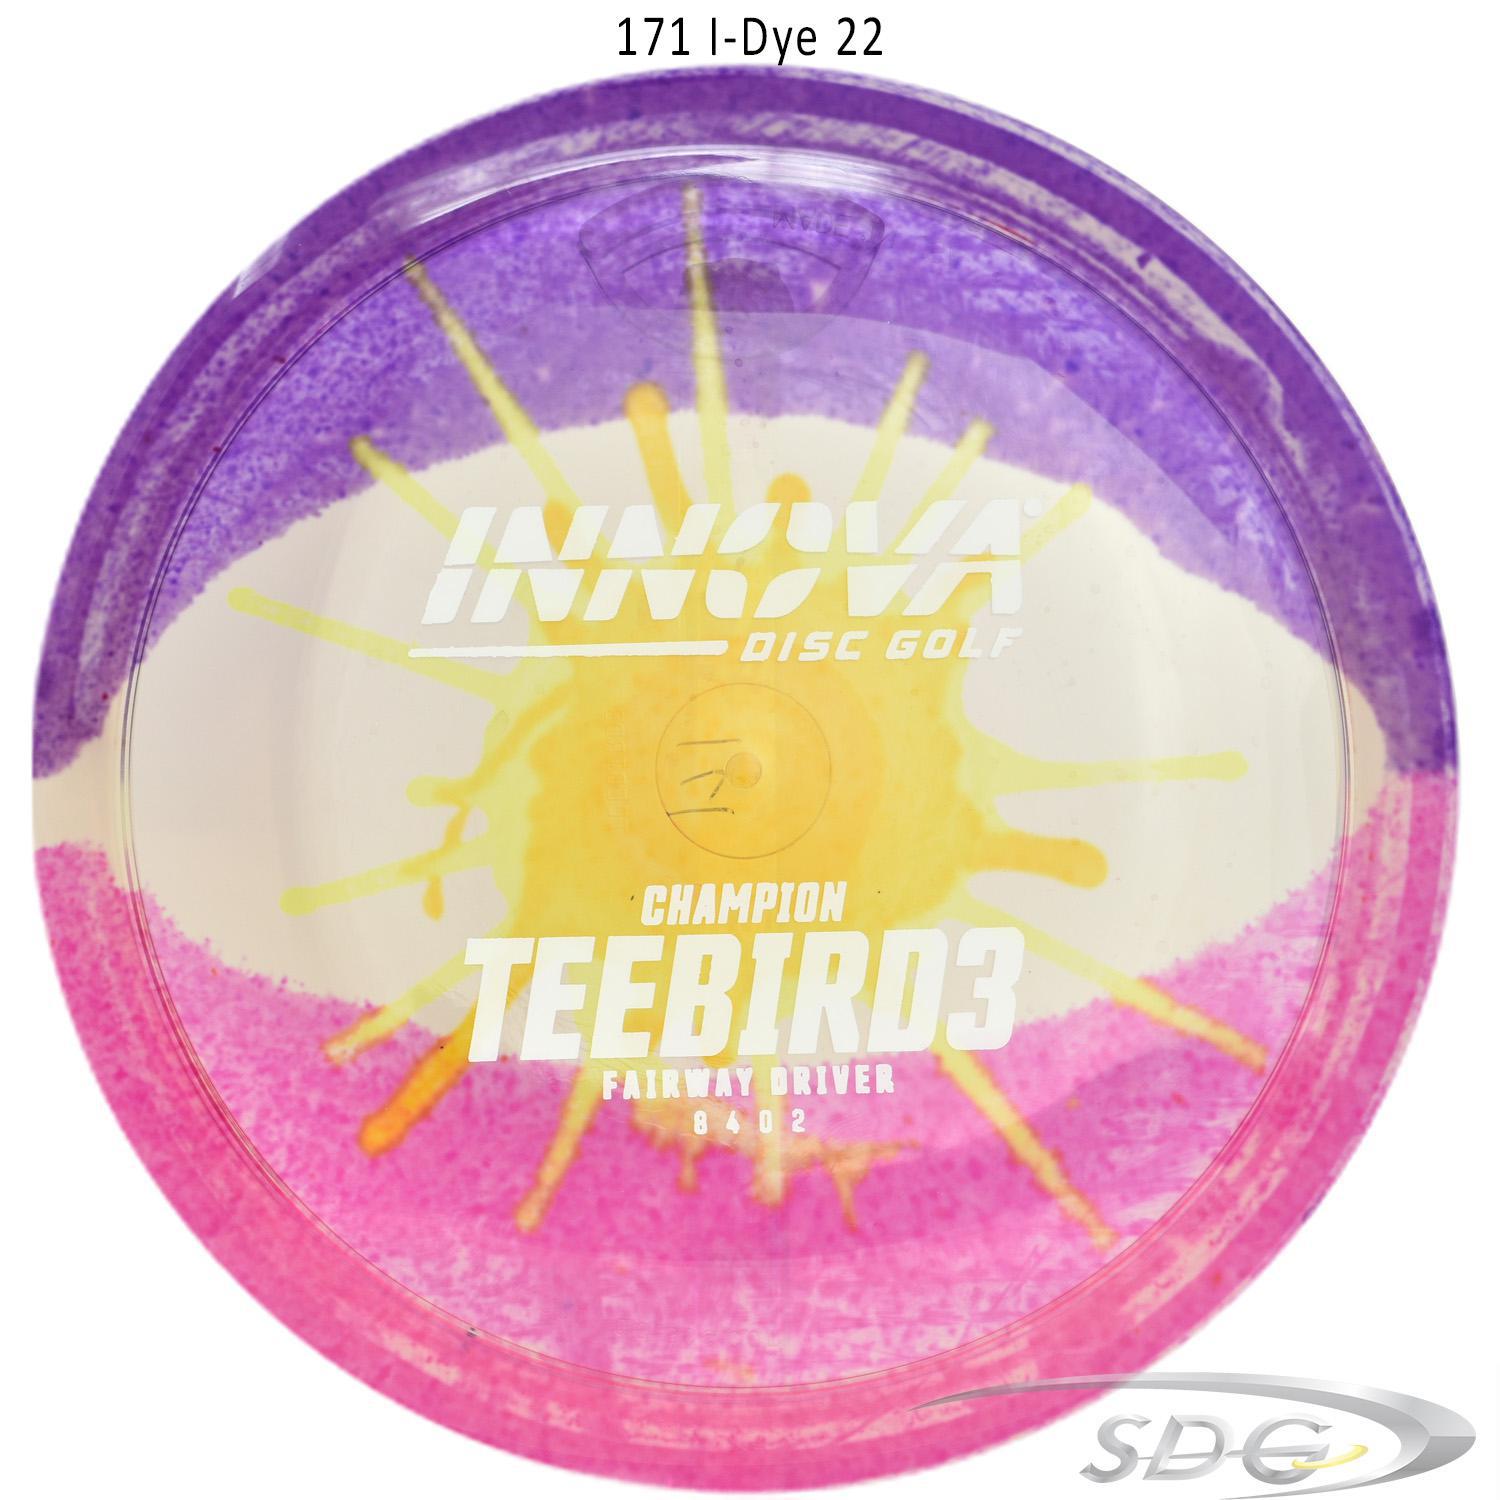 innova-champion-teebird3-i-dye-disc-golf-fairway-driver 171 I-Dye 22 